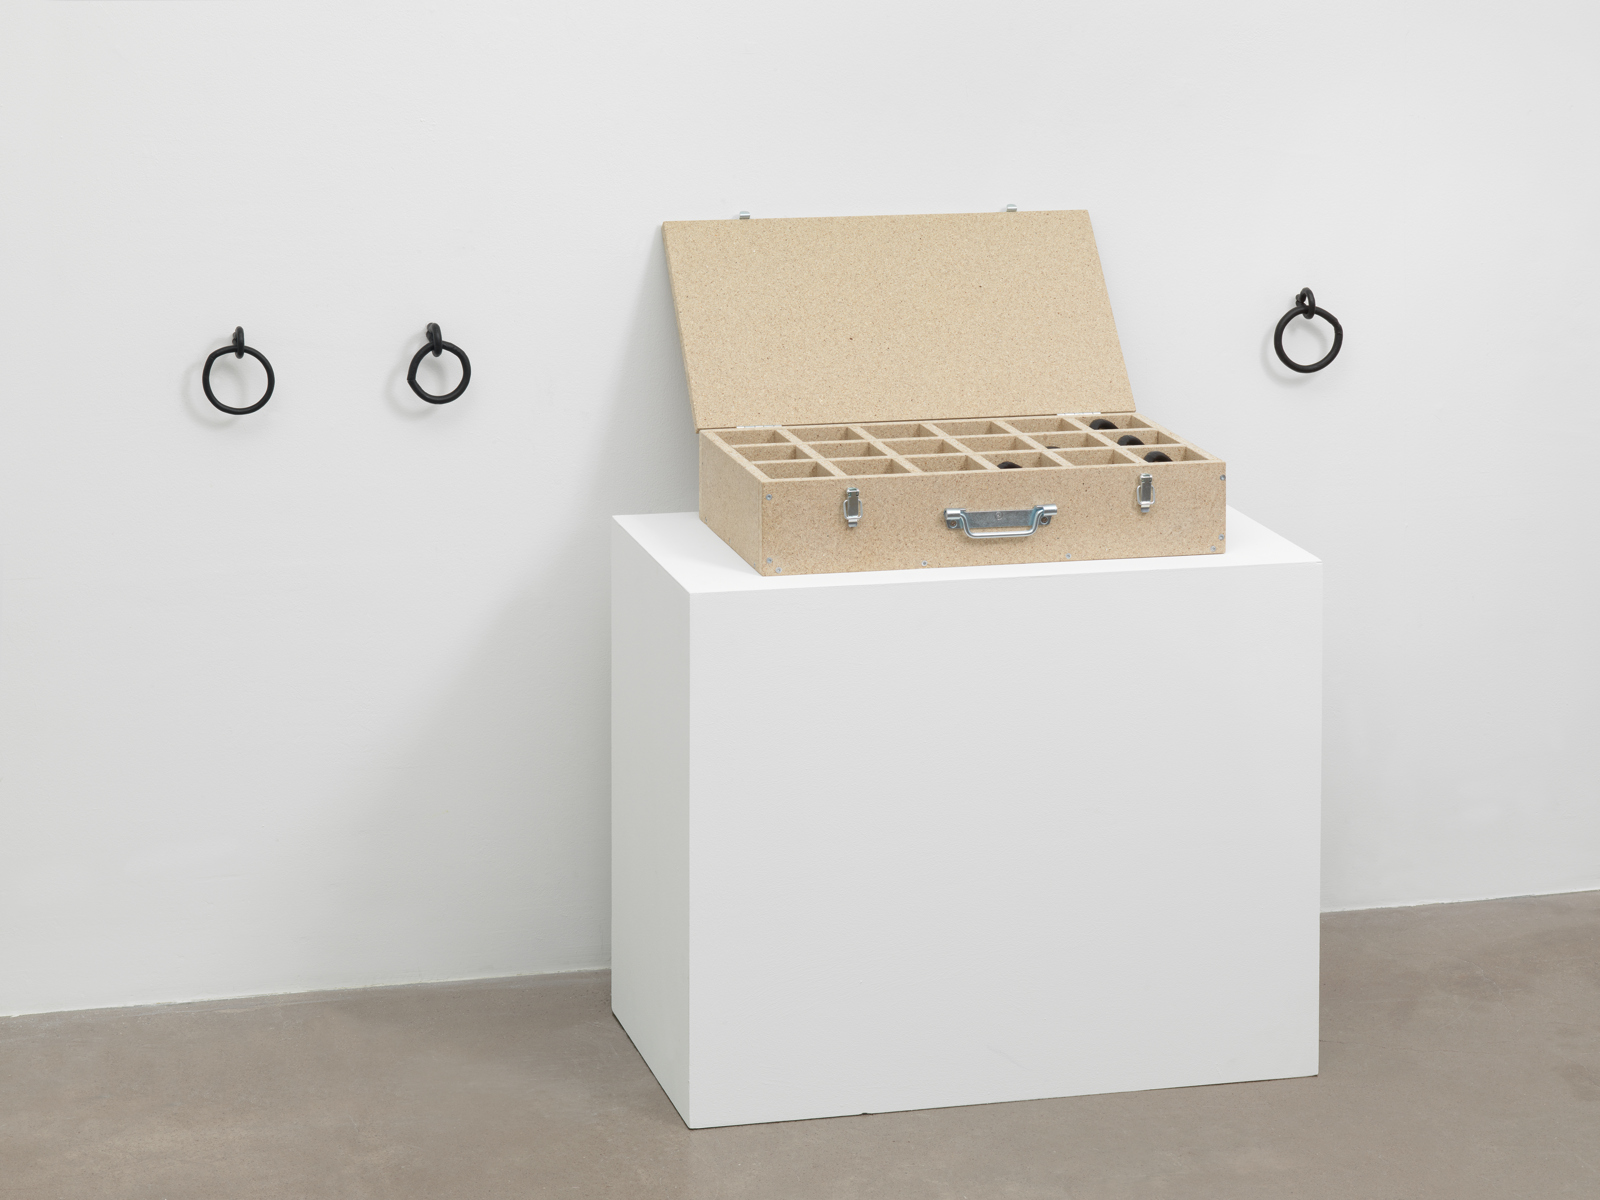 Valentin Carron / Galerie Eva Presenhuber, Zürich / 2012